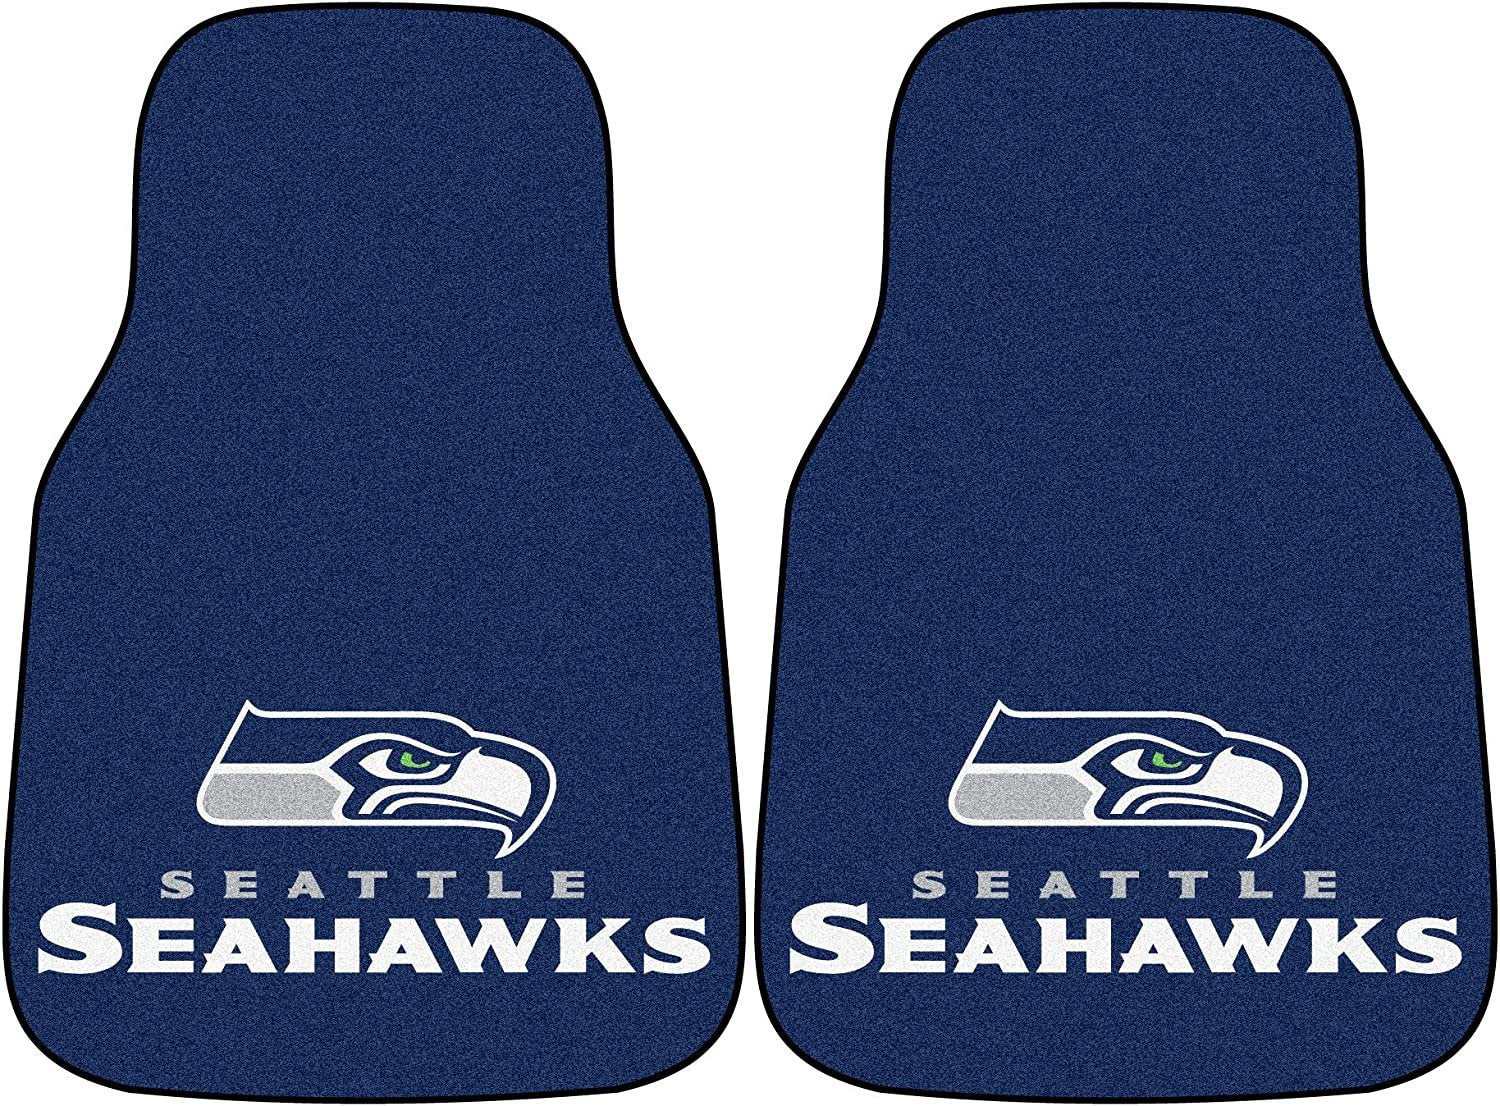 Seattle Seahawks Front Floor Mats, Carpet Car Set, 18x27 Inch, Nylon, Set of 2